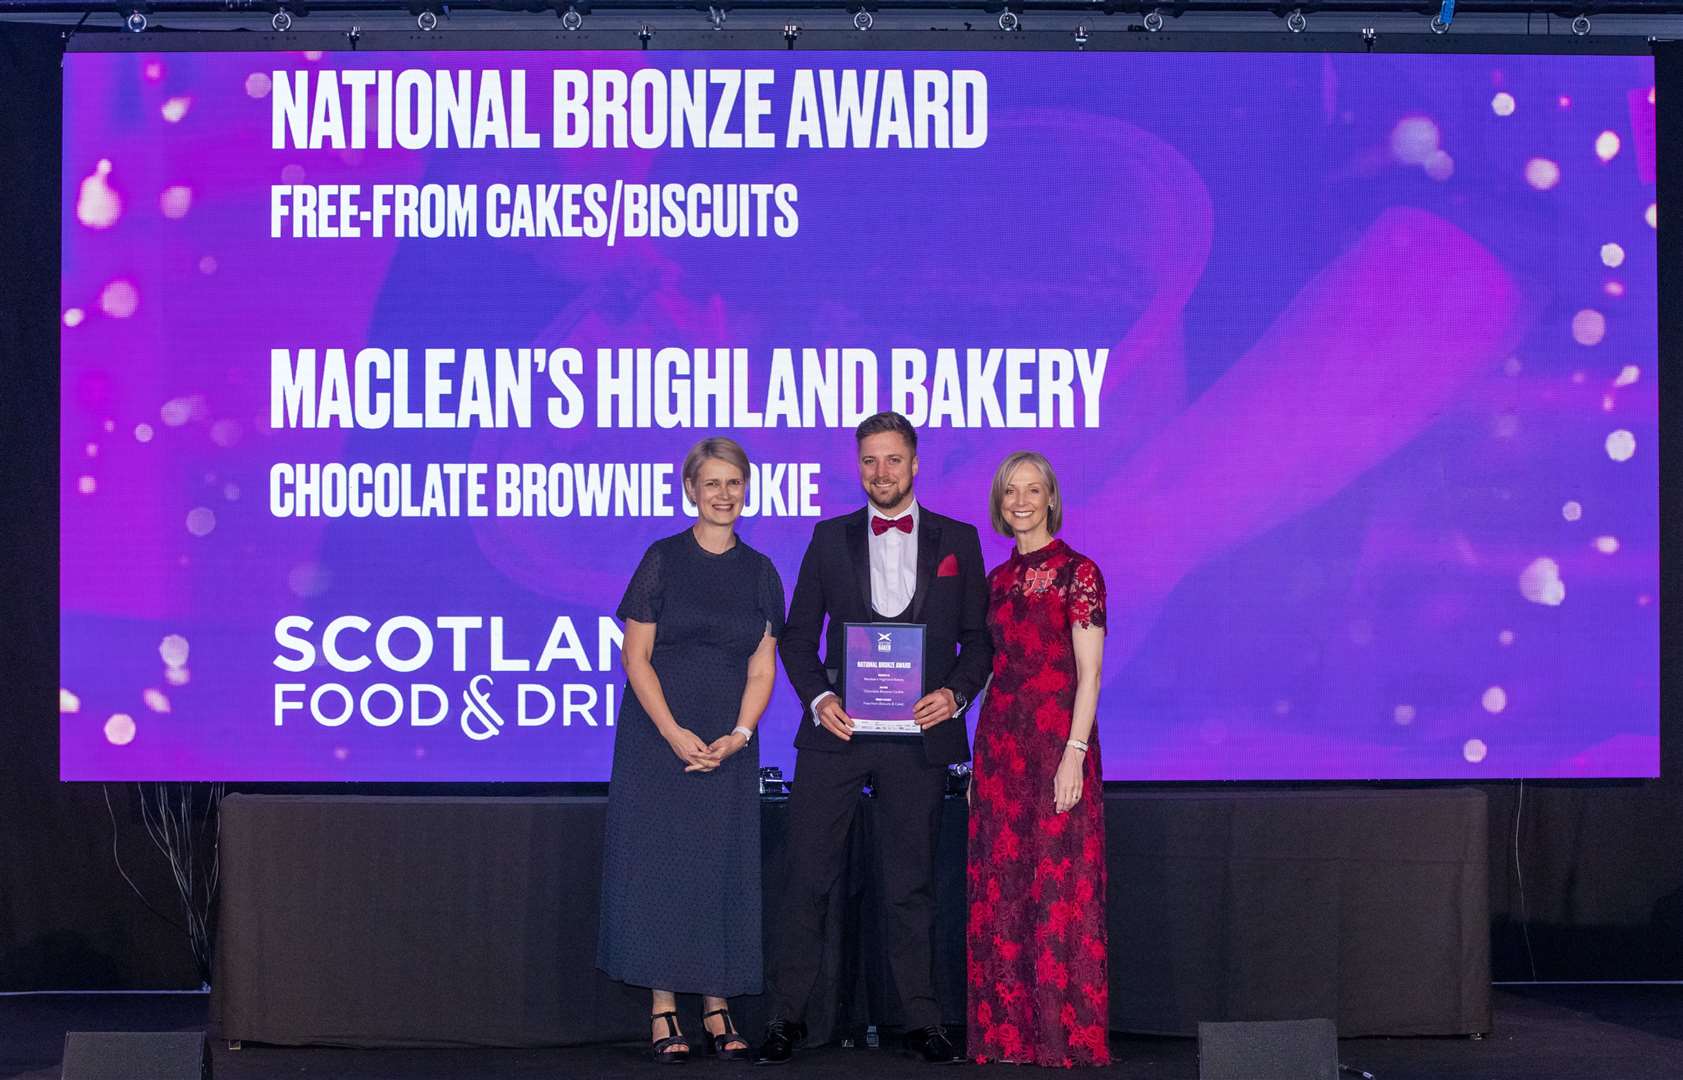 Maclean's Highland Bakery took home three awards.